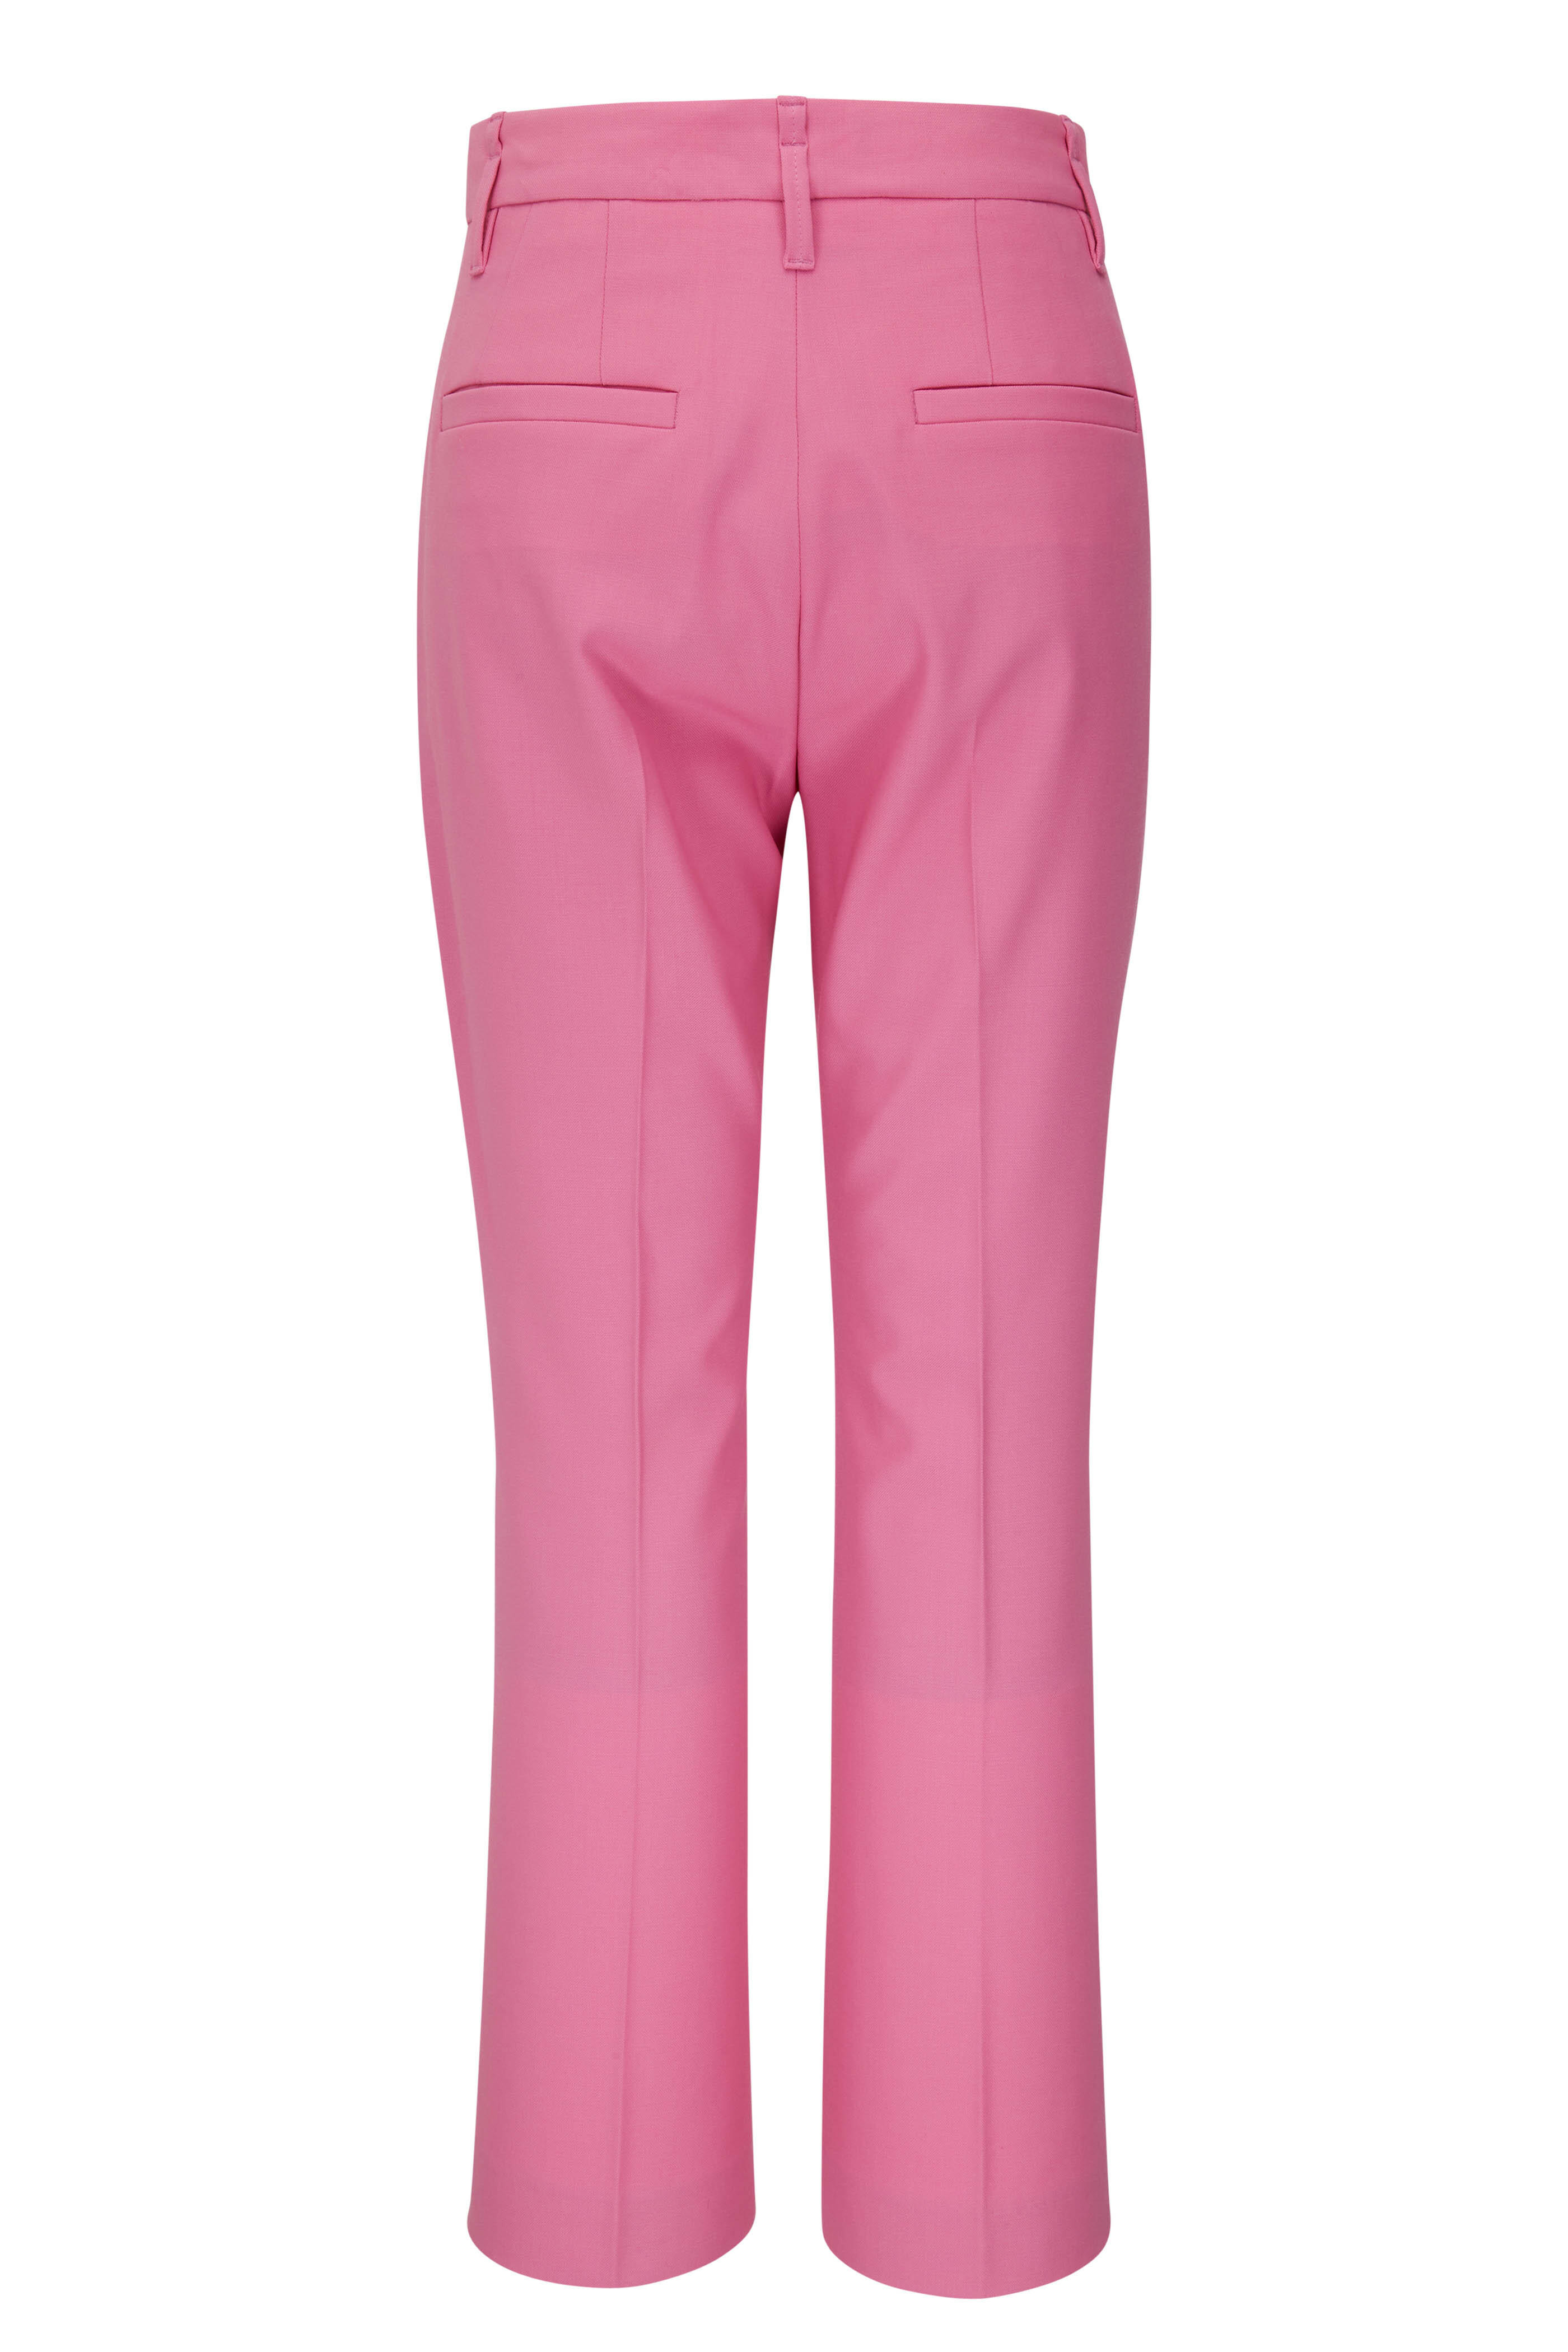 Dorothee Schumacher - Striking Lightness Adored Pink Wide Leg Pant